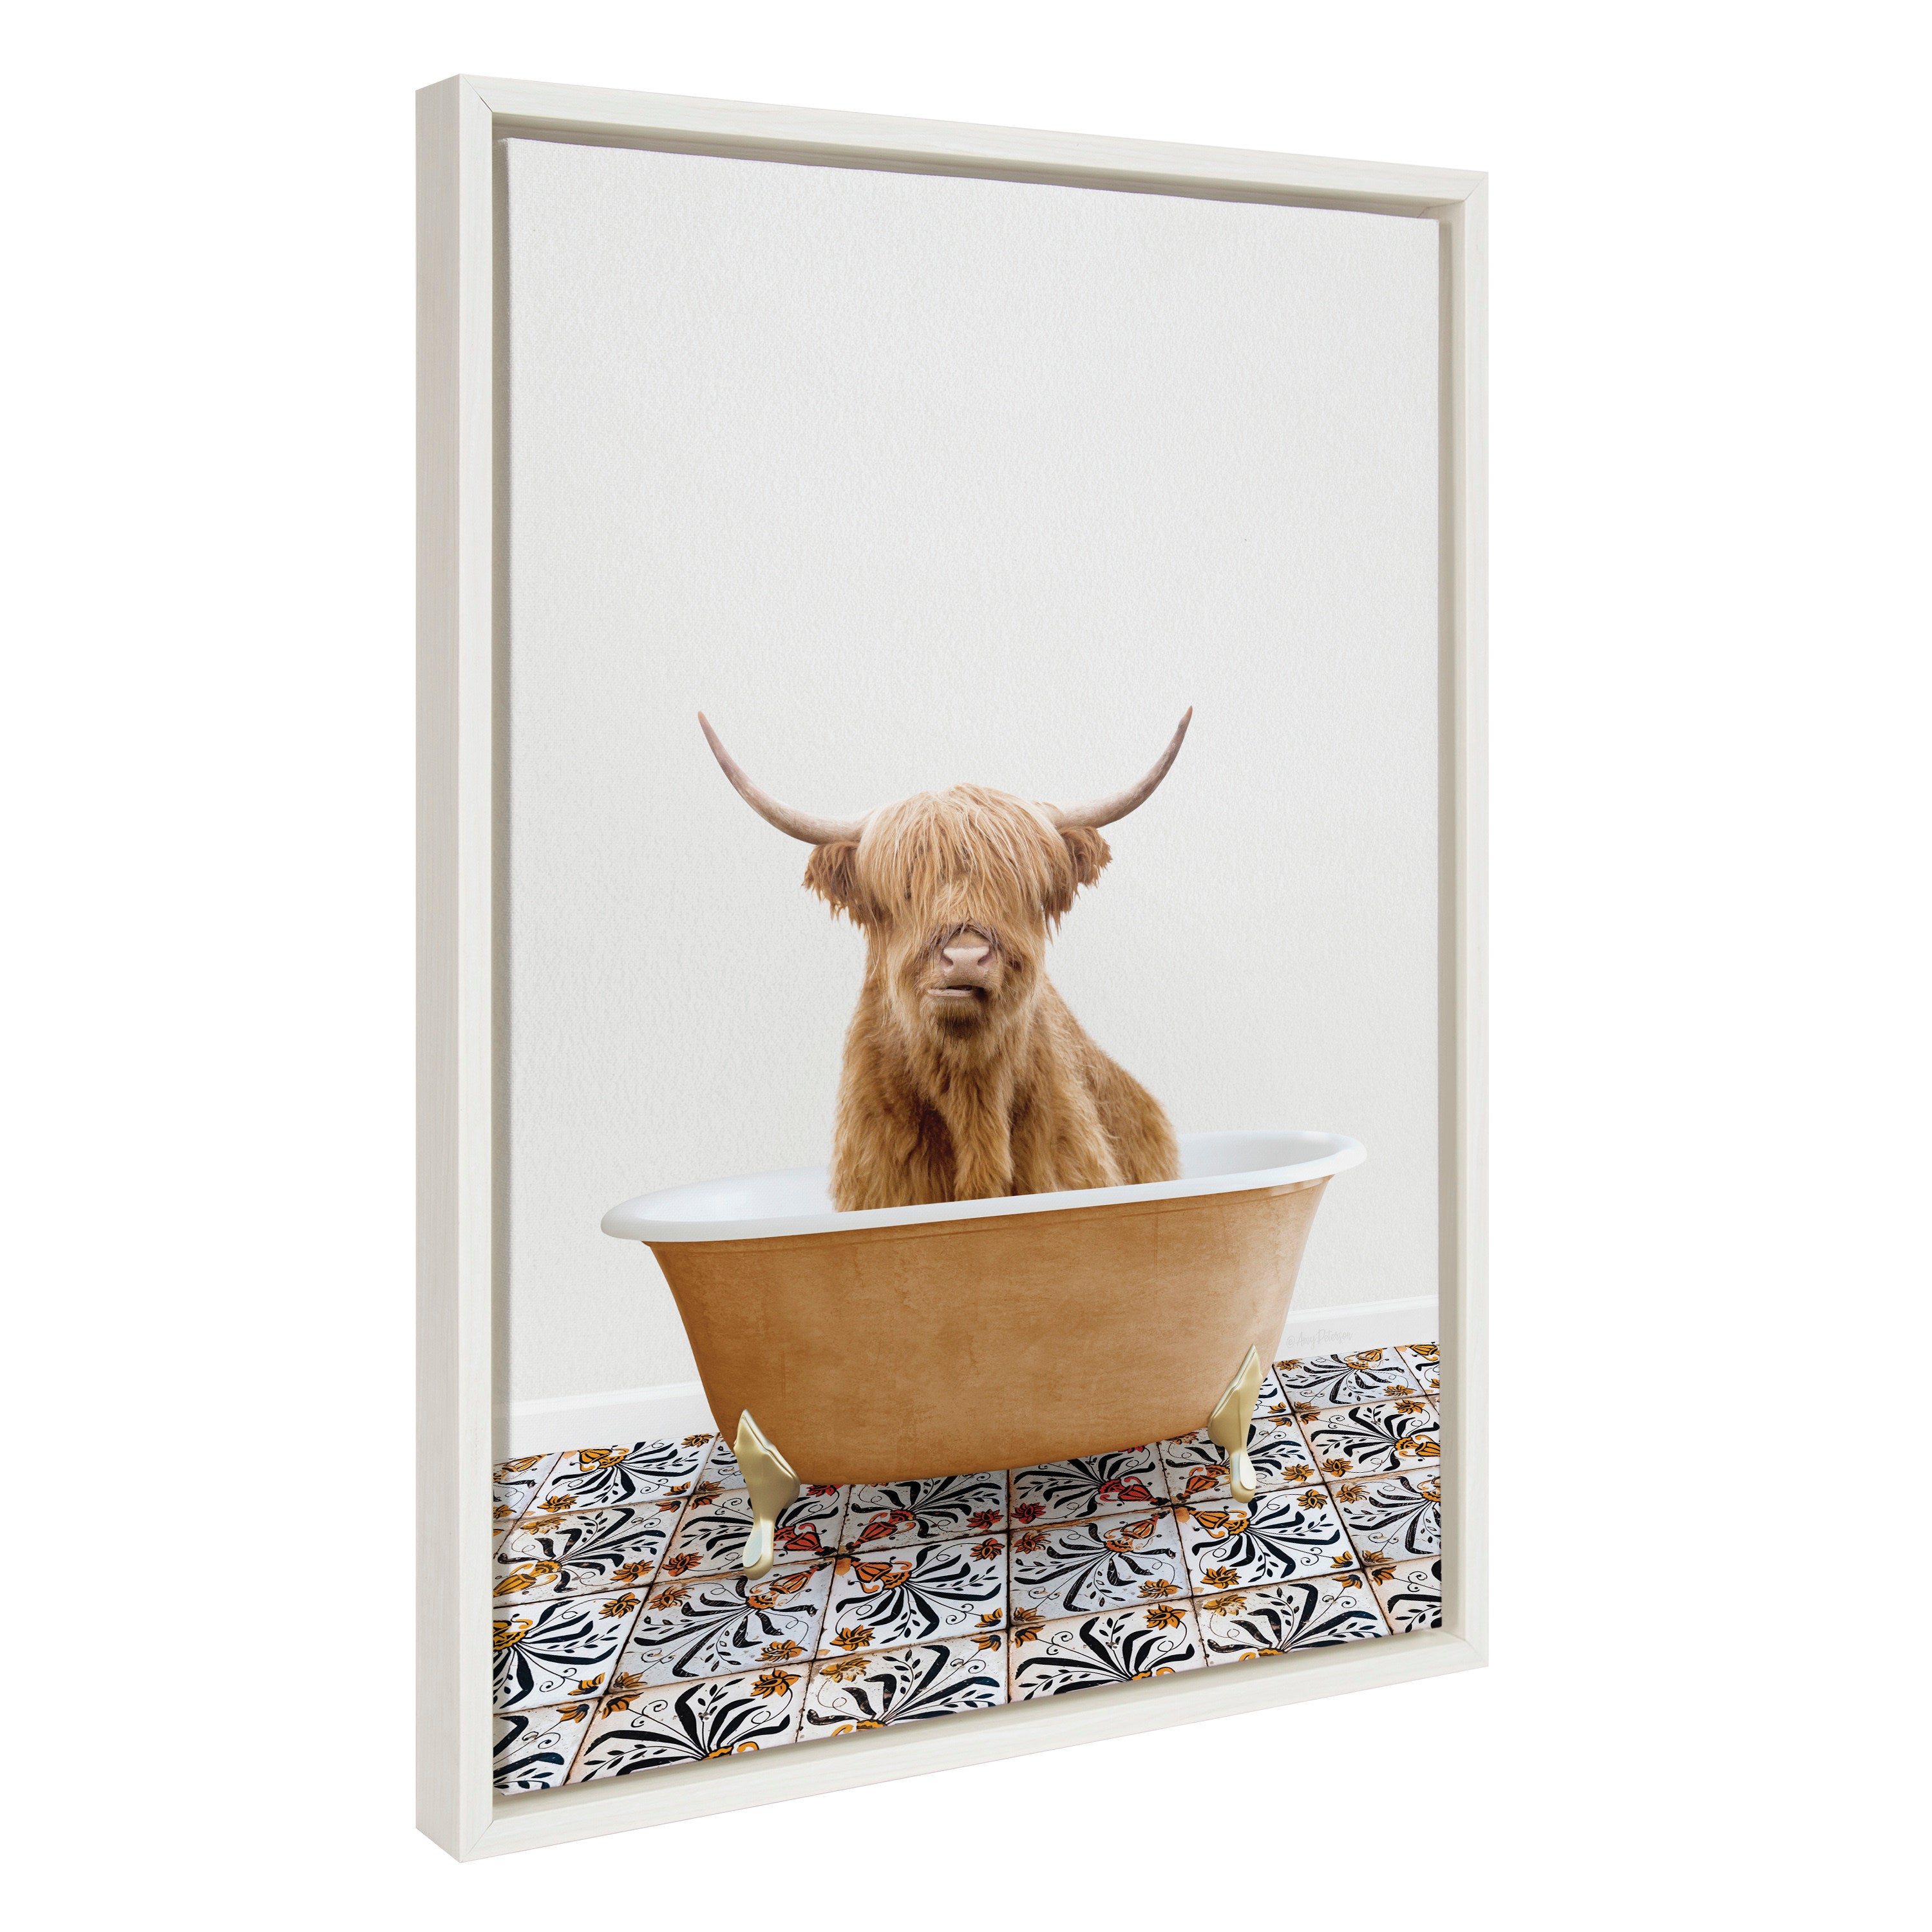 Sylvie Highland Cow In Mediterranean Bath Framed Canvas by Amy Peterson Art Studio